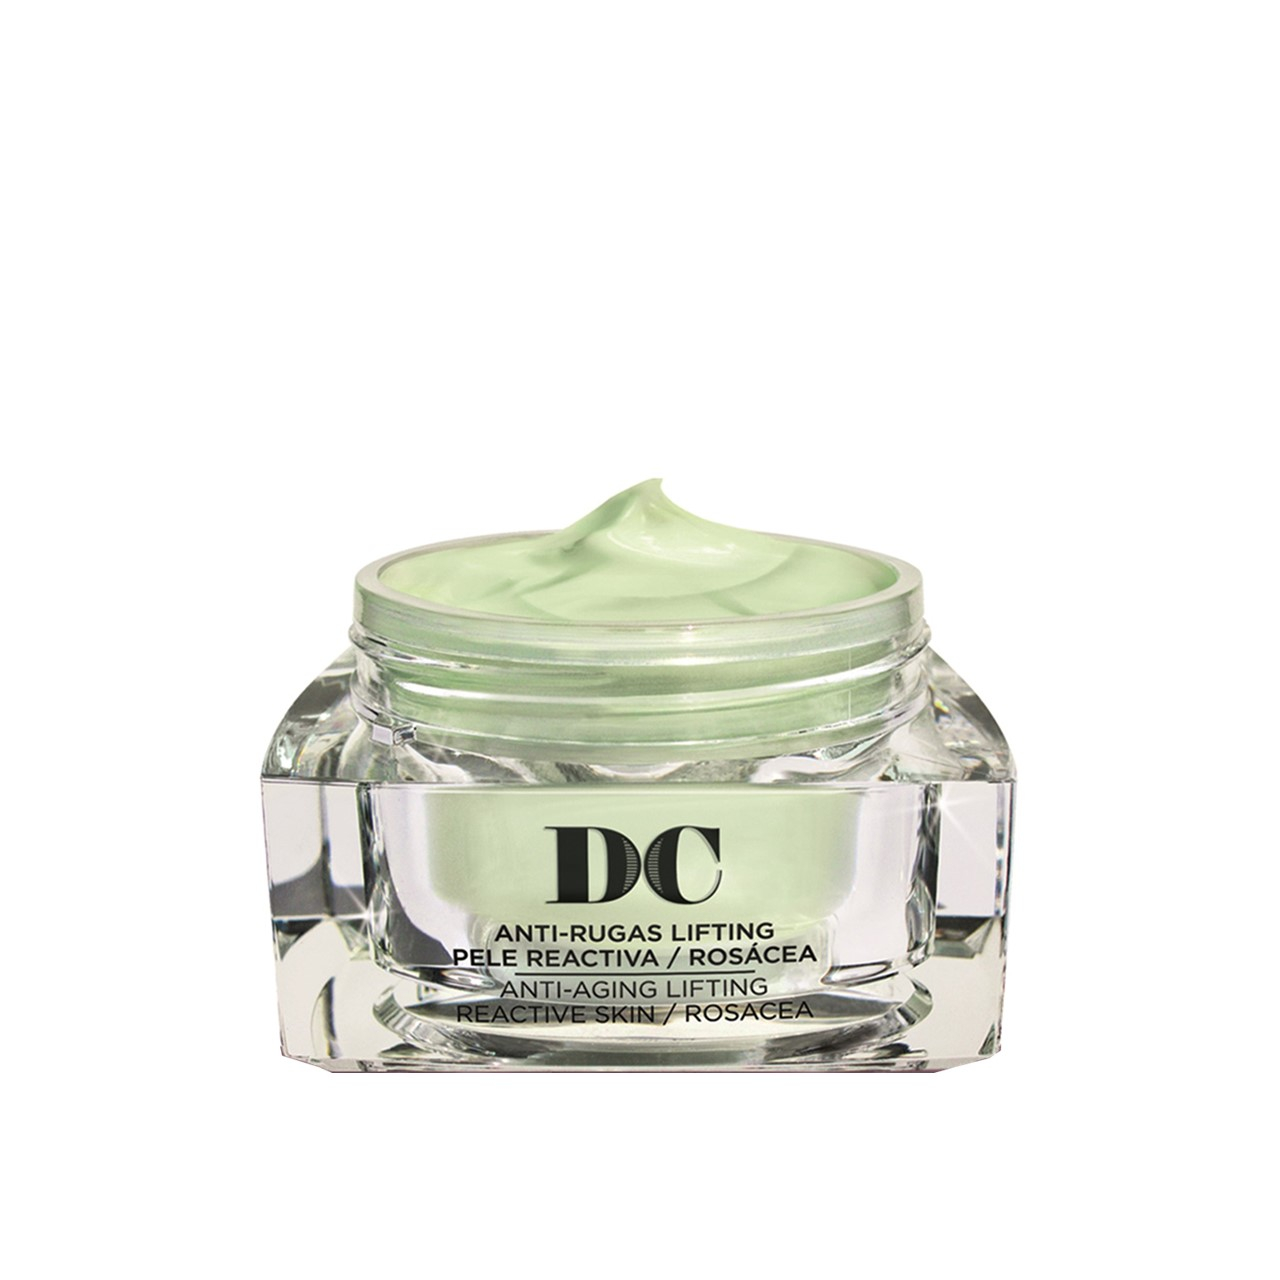 DC Anti-Aging Lifting Cream for Reactive Skin/Rosacea 50ml